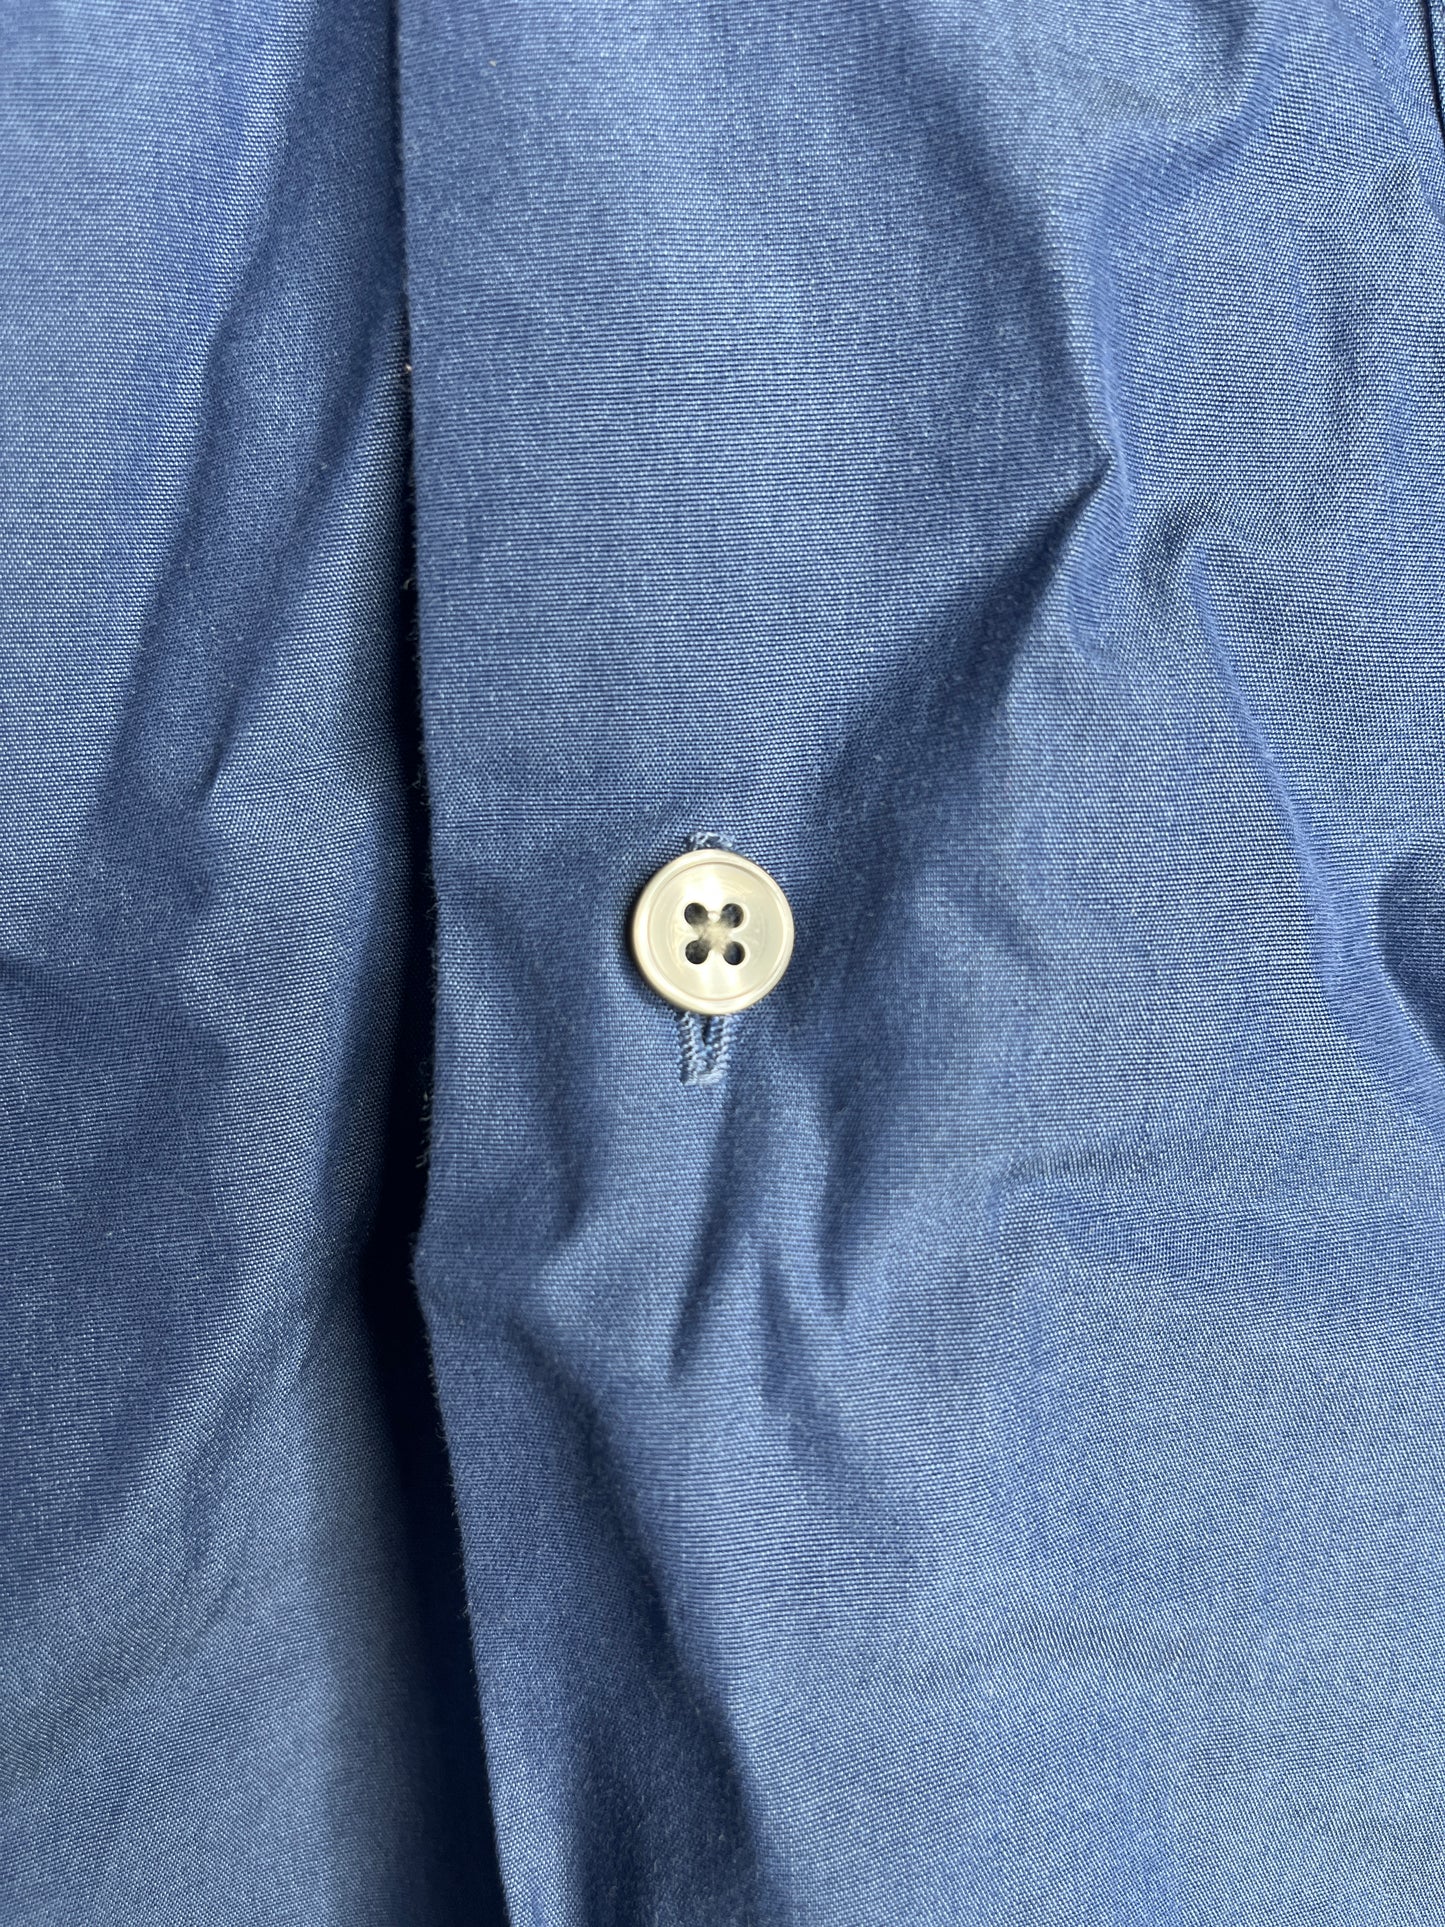 Calvin Klein  Shirt Blue Size 15.5 SKU 000447